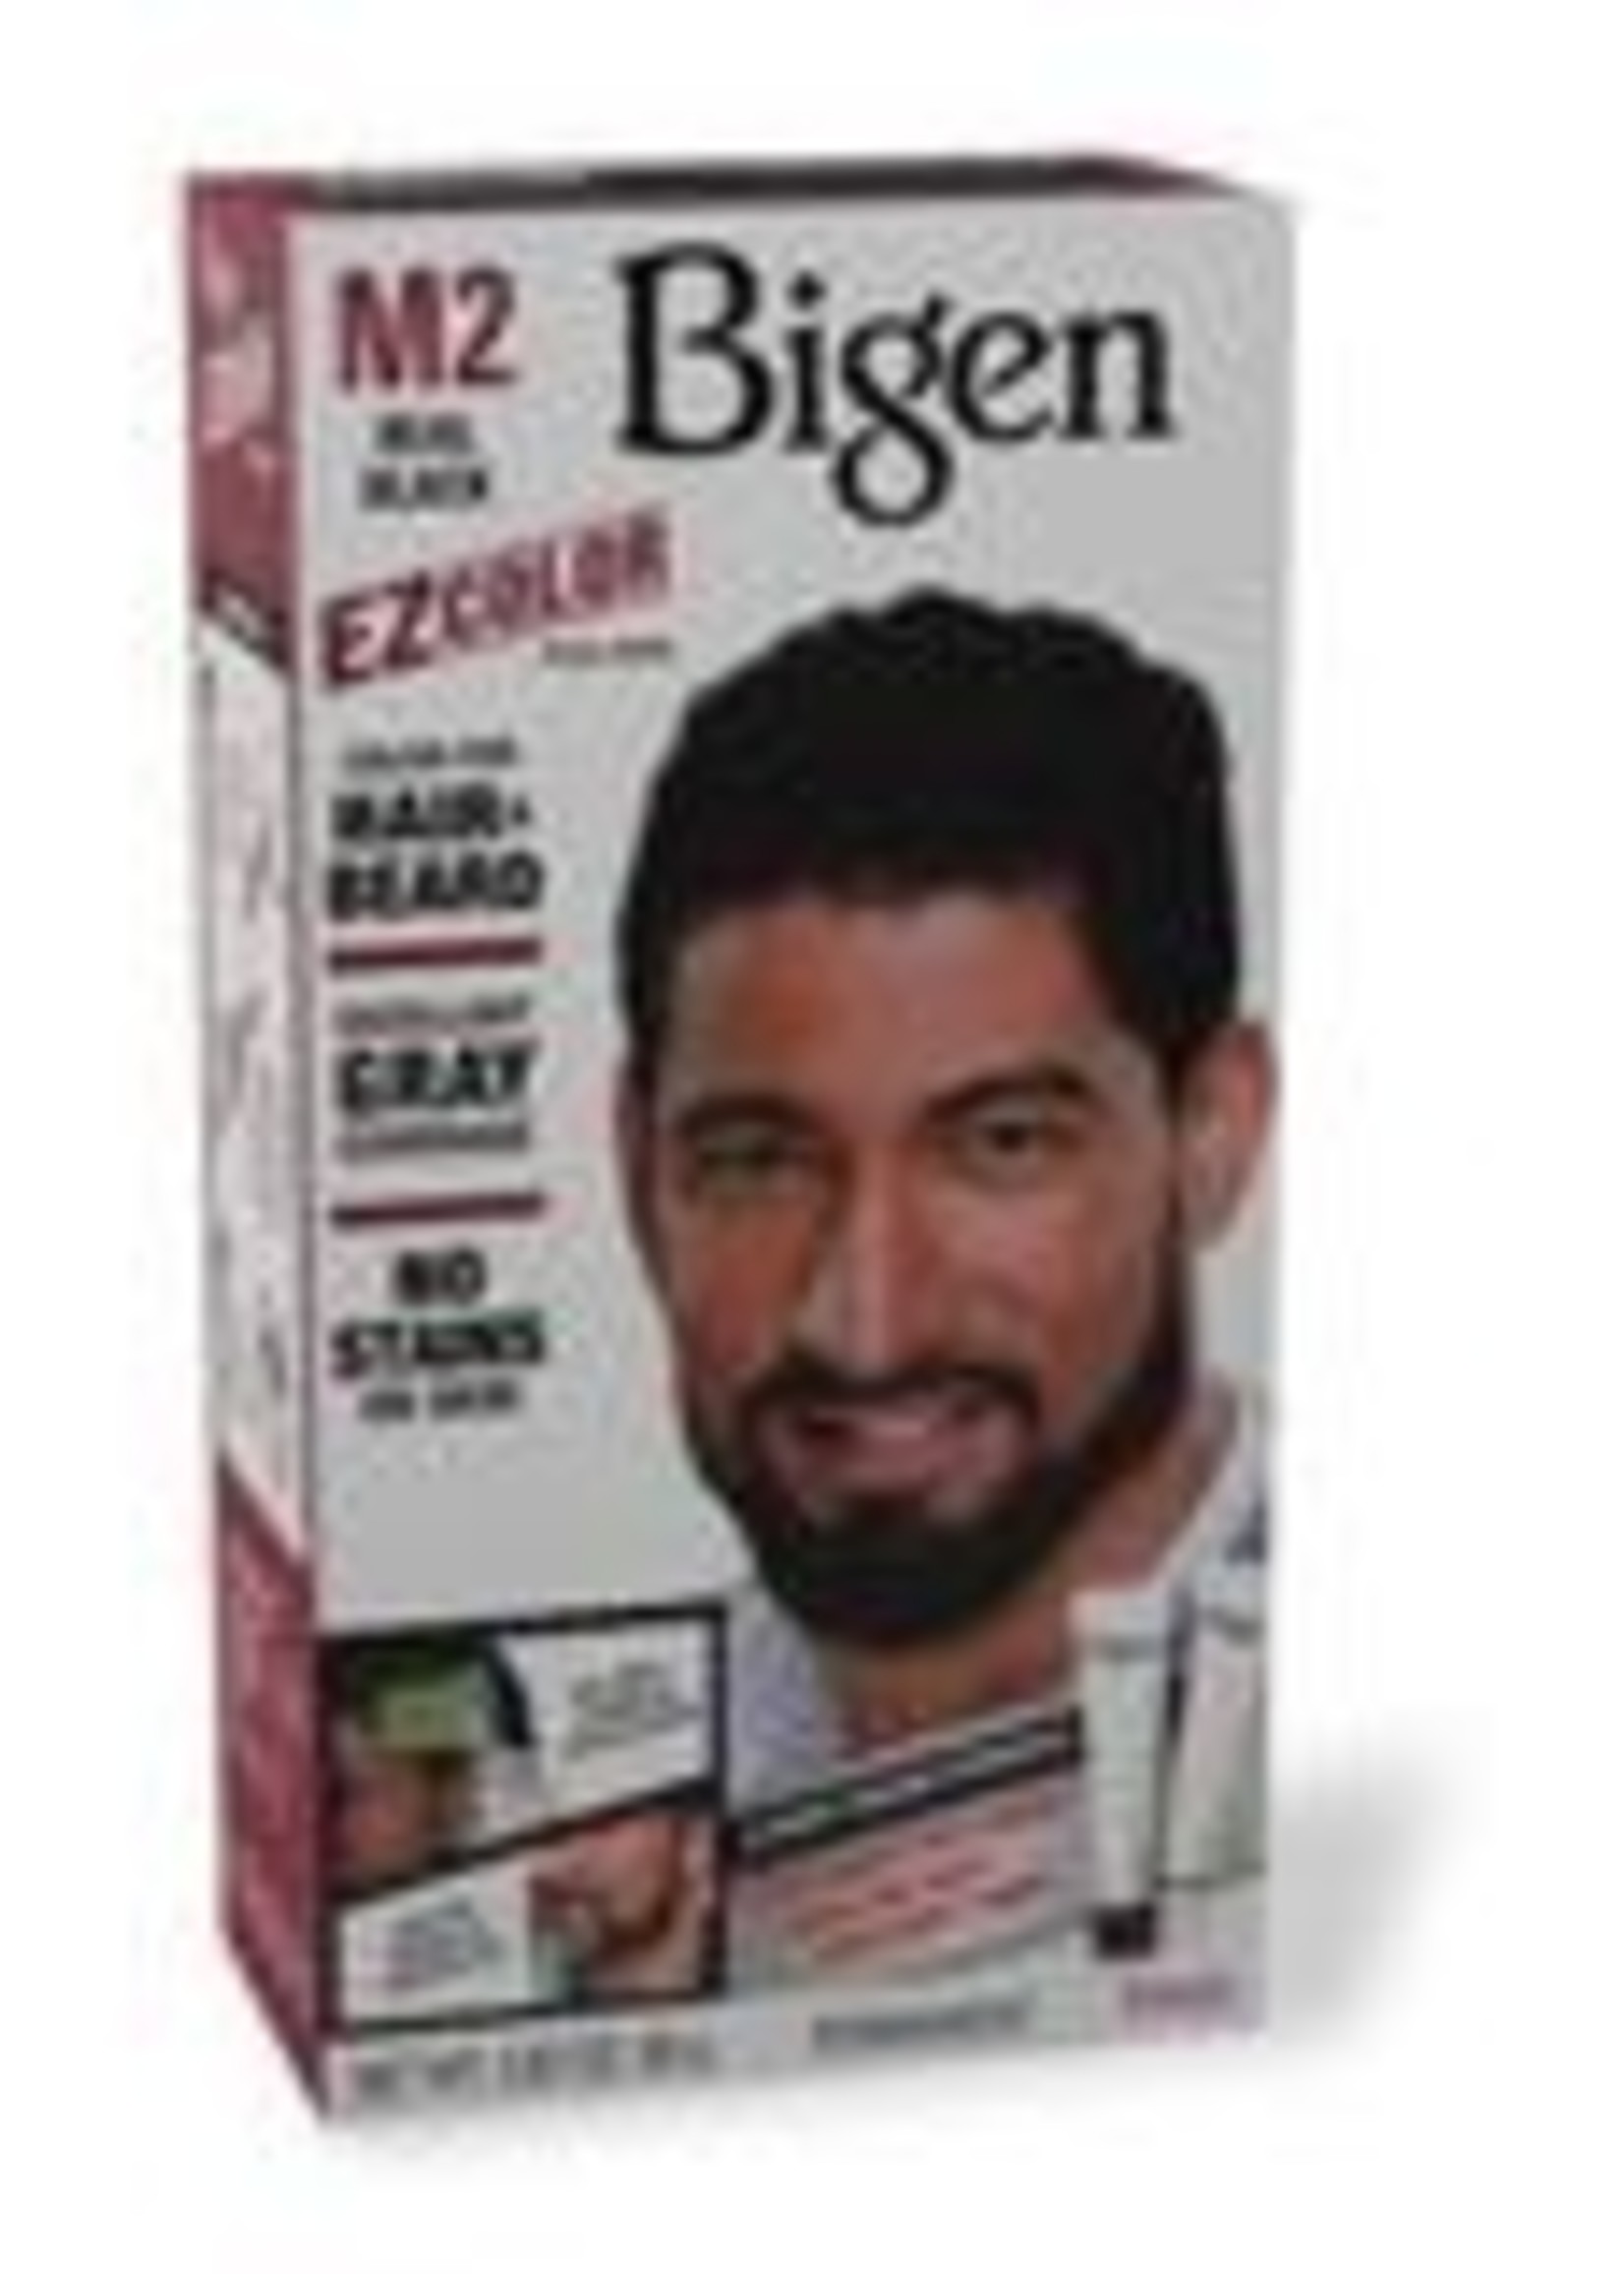 Bigen Men's Beard & Hair Dye EZ Color